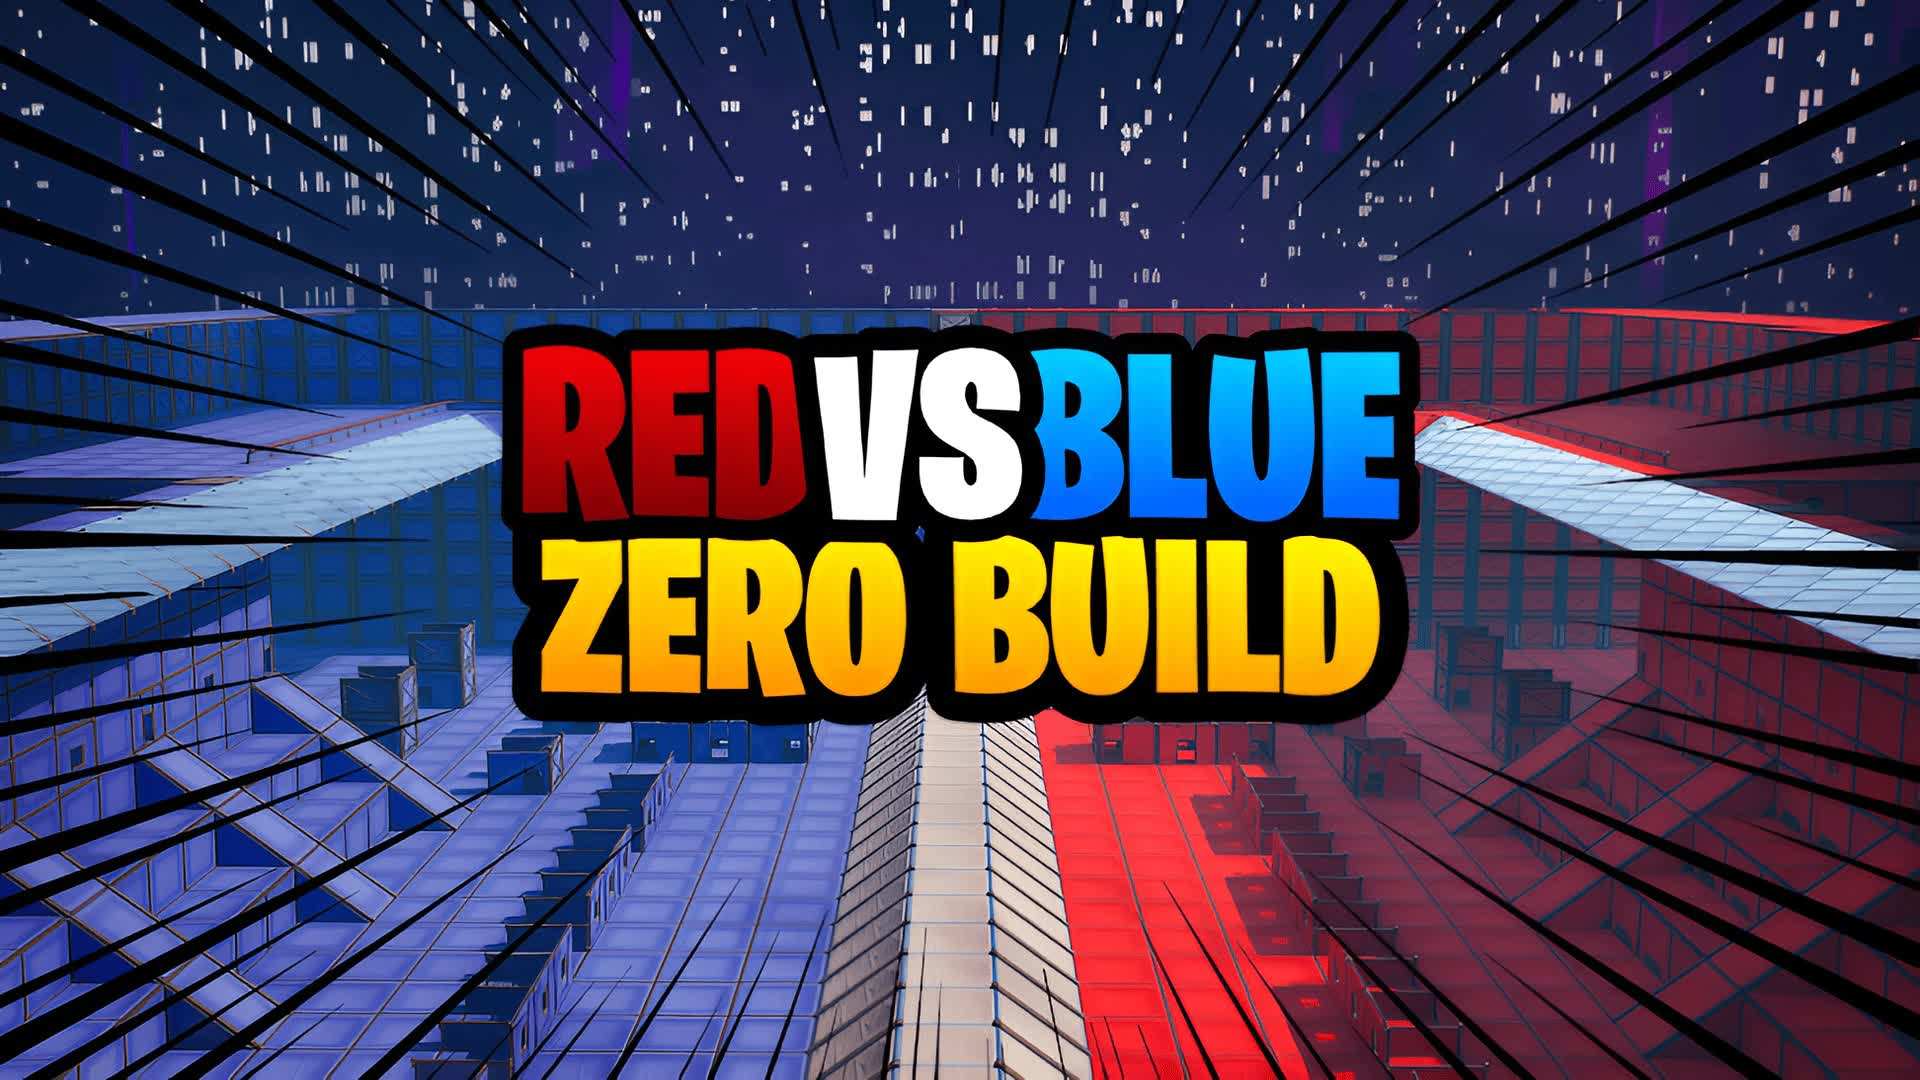 CRAZY RED VS BLUE: ZERO BUILD!